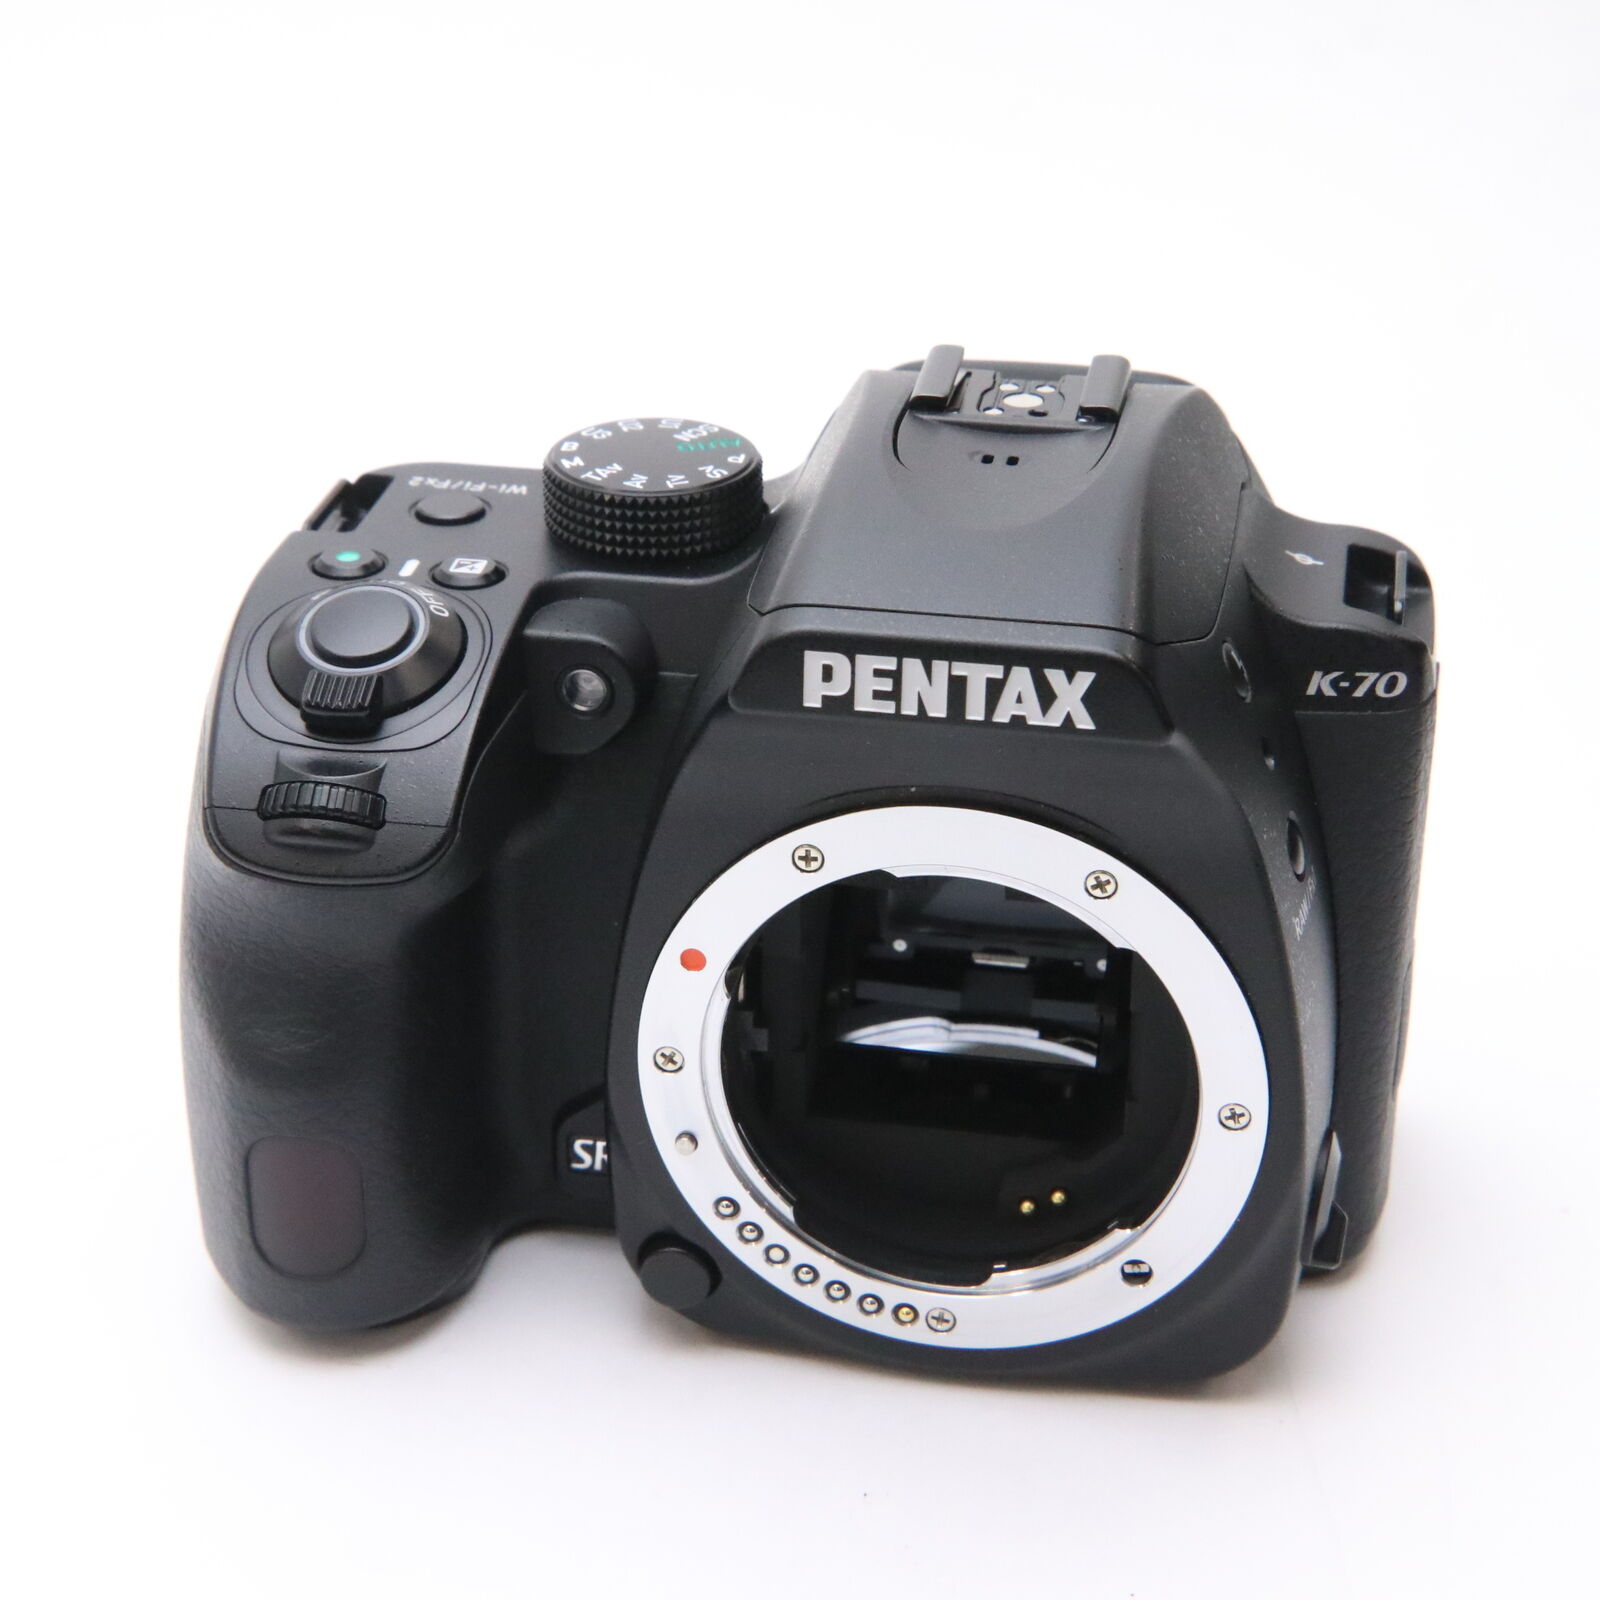 PENTAX K-70 Body Black -Near Mint- shutter count 7961 shots